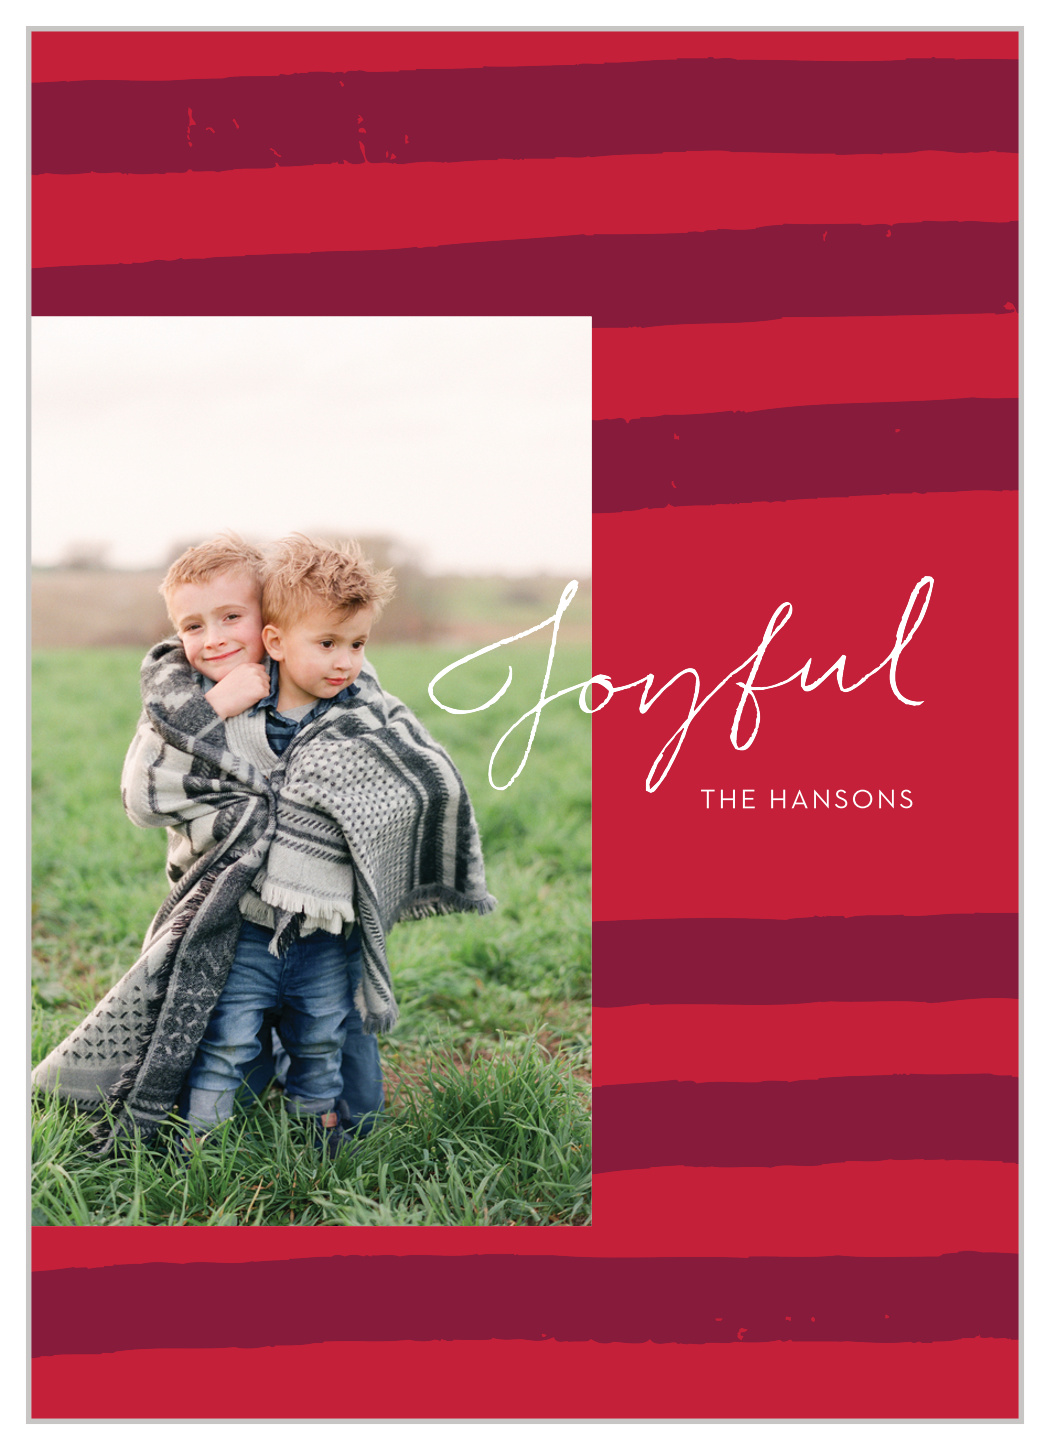 Joyful Strokes Holiday Cards